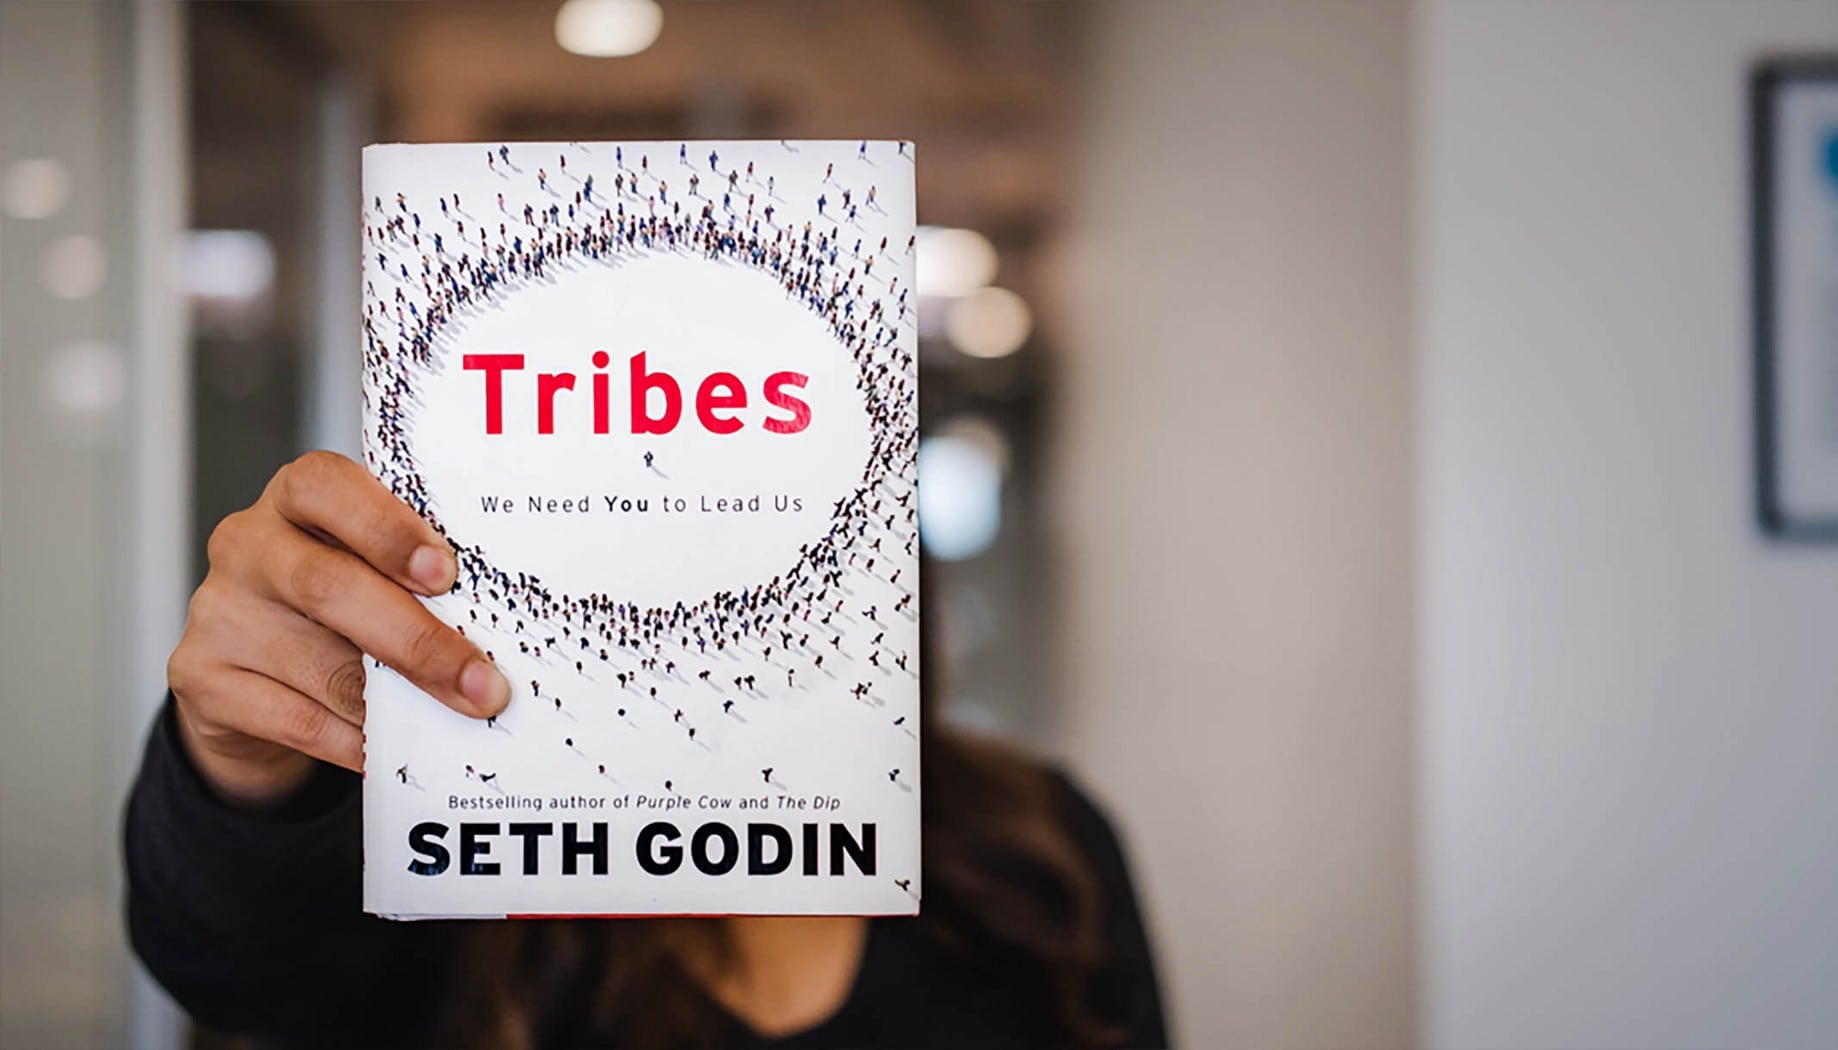 Seth Godin's Net Worth- Seth Godin's Build Tribes